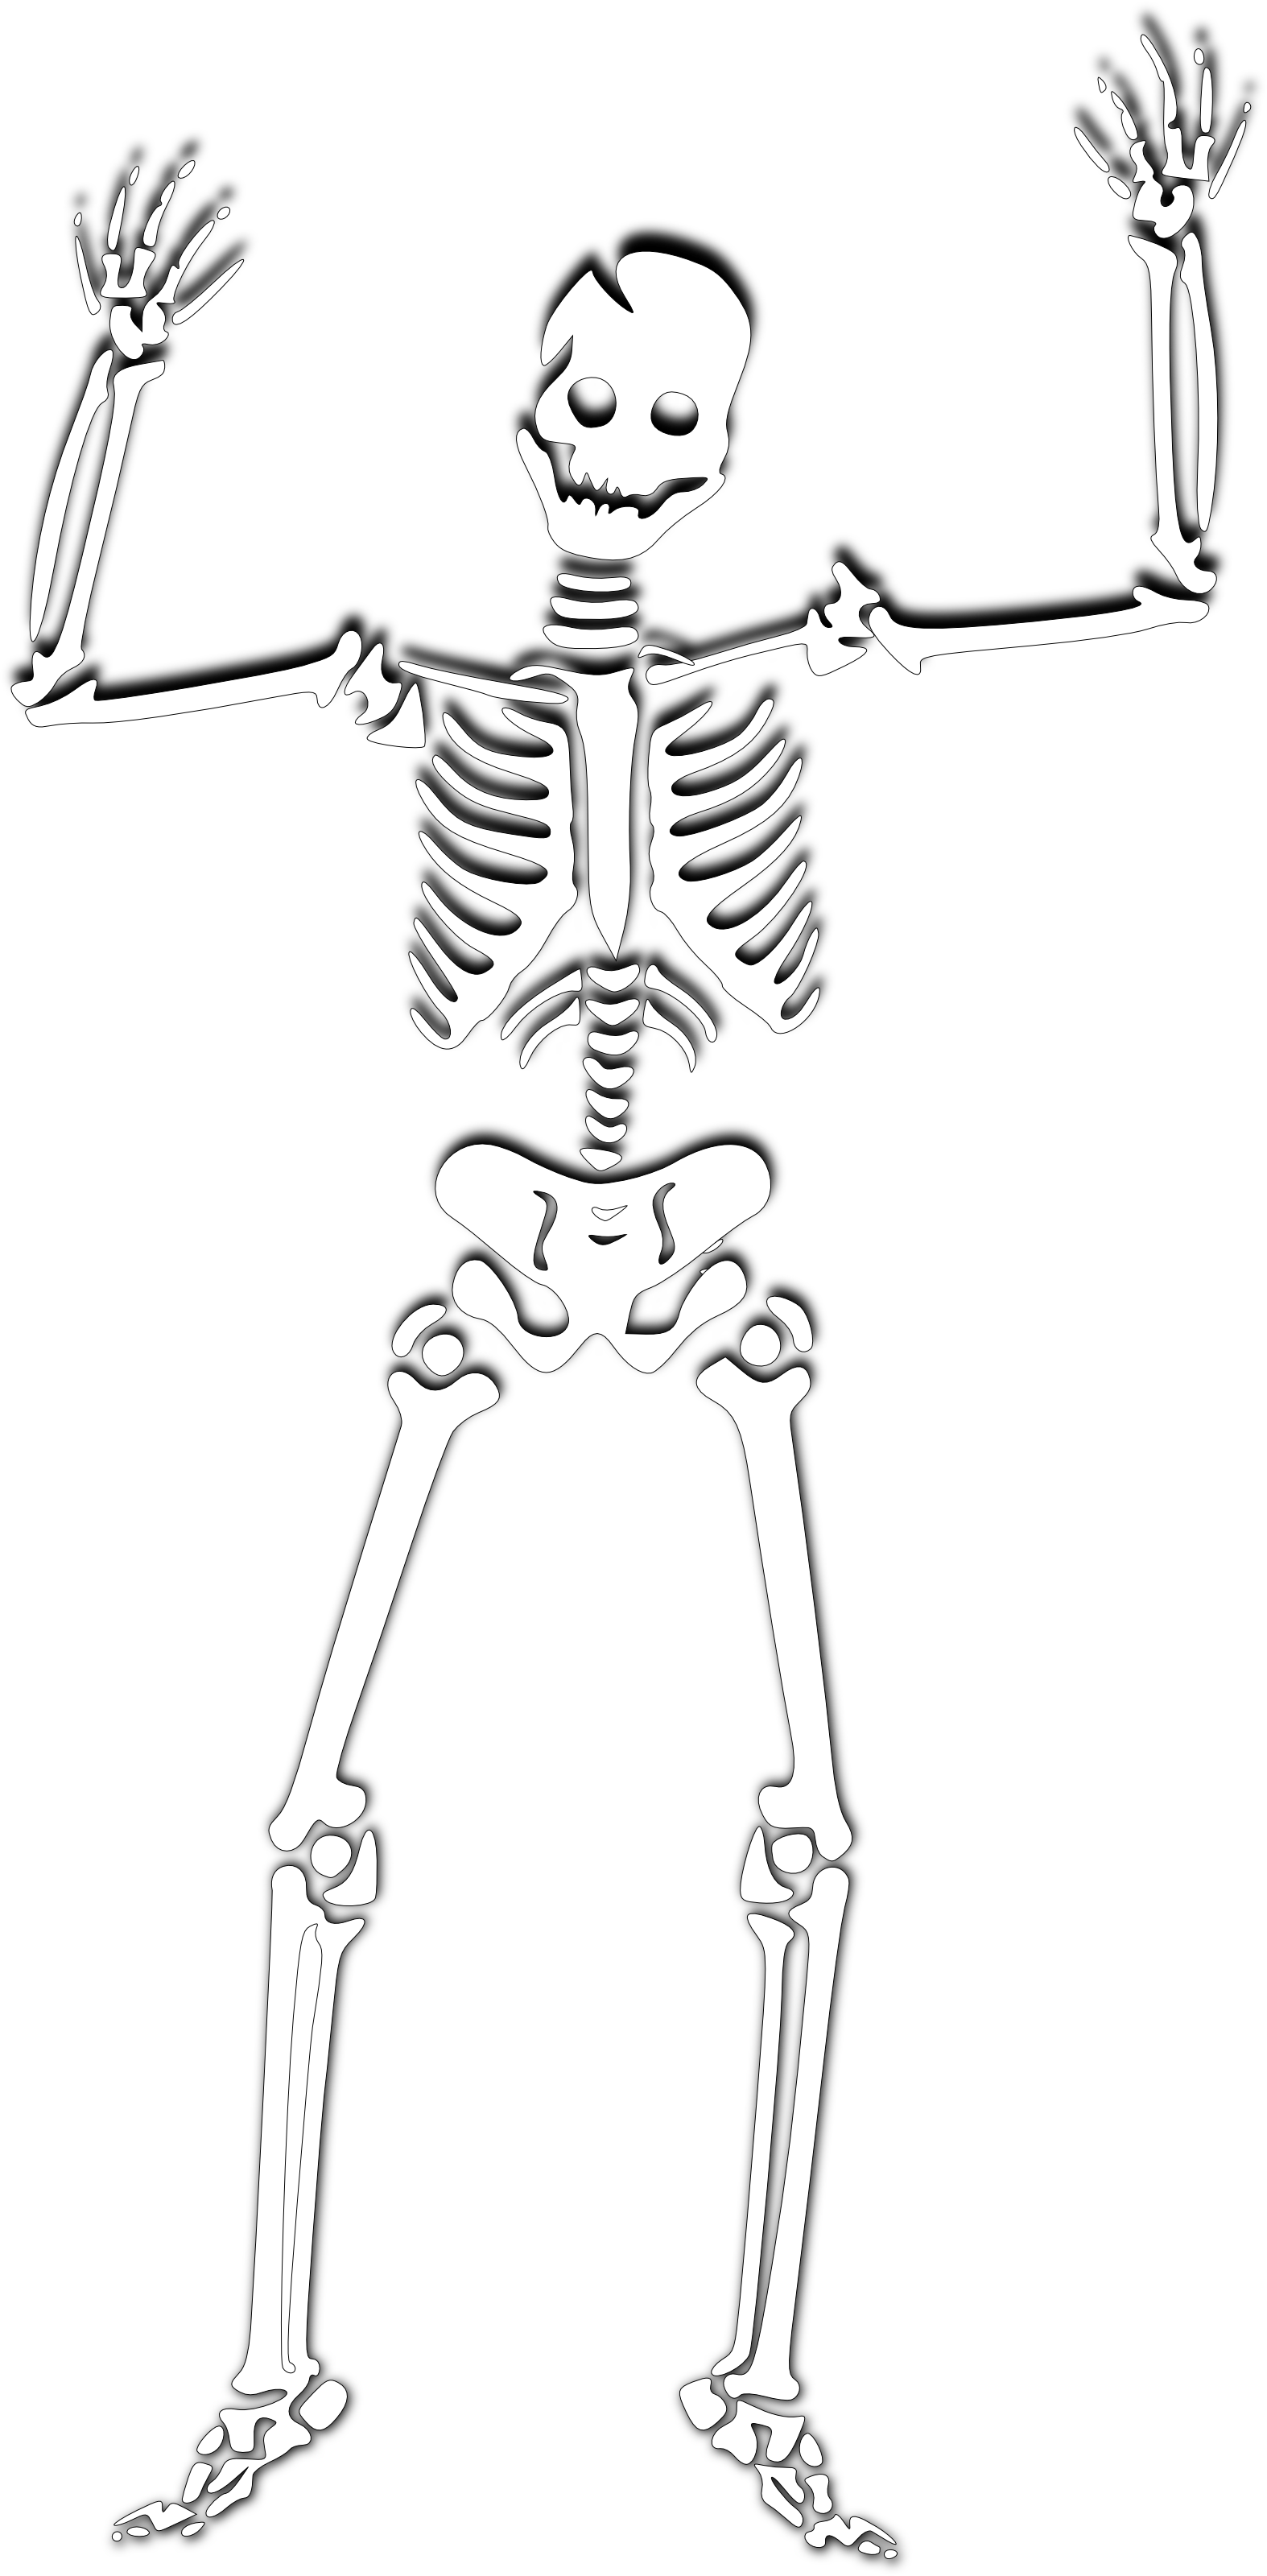 Download PNG image - Halloween Skeleton PNG Photos 